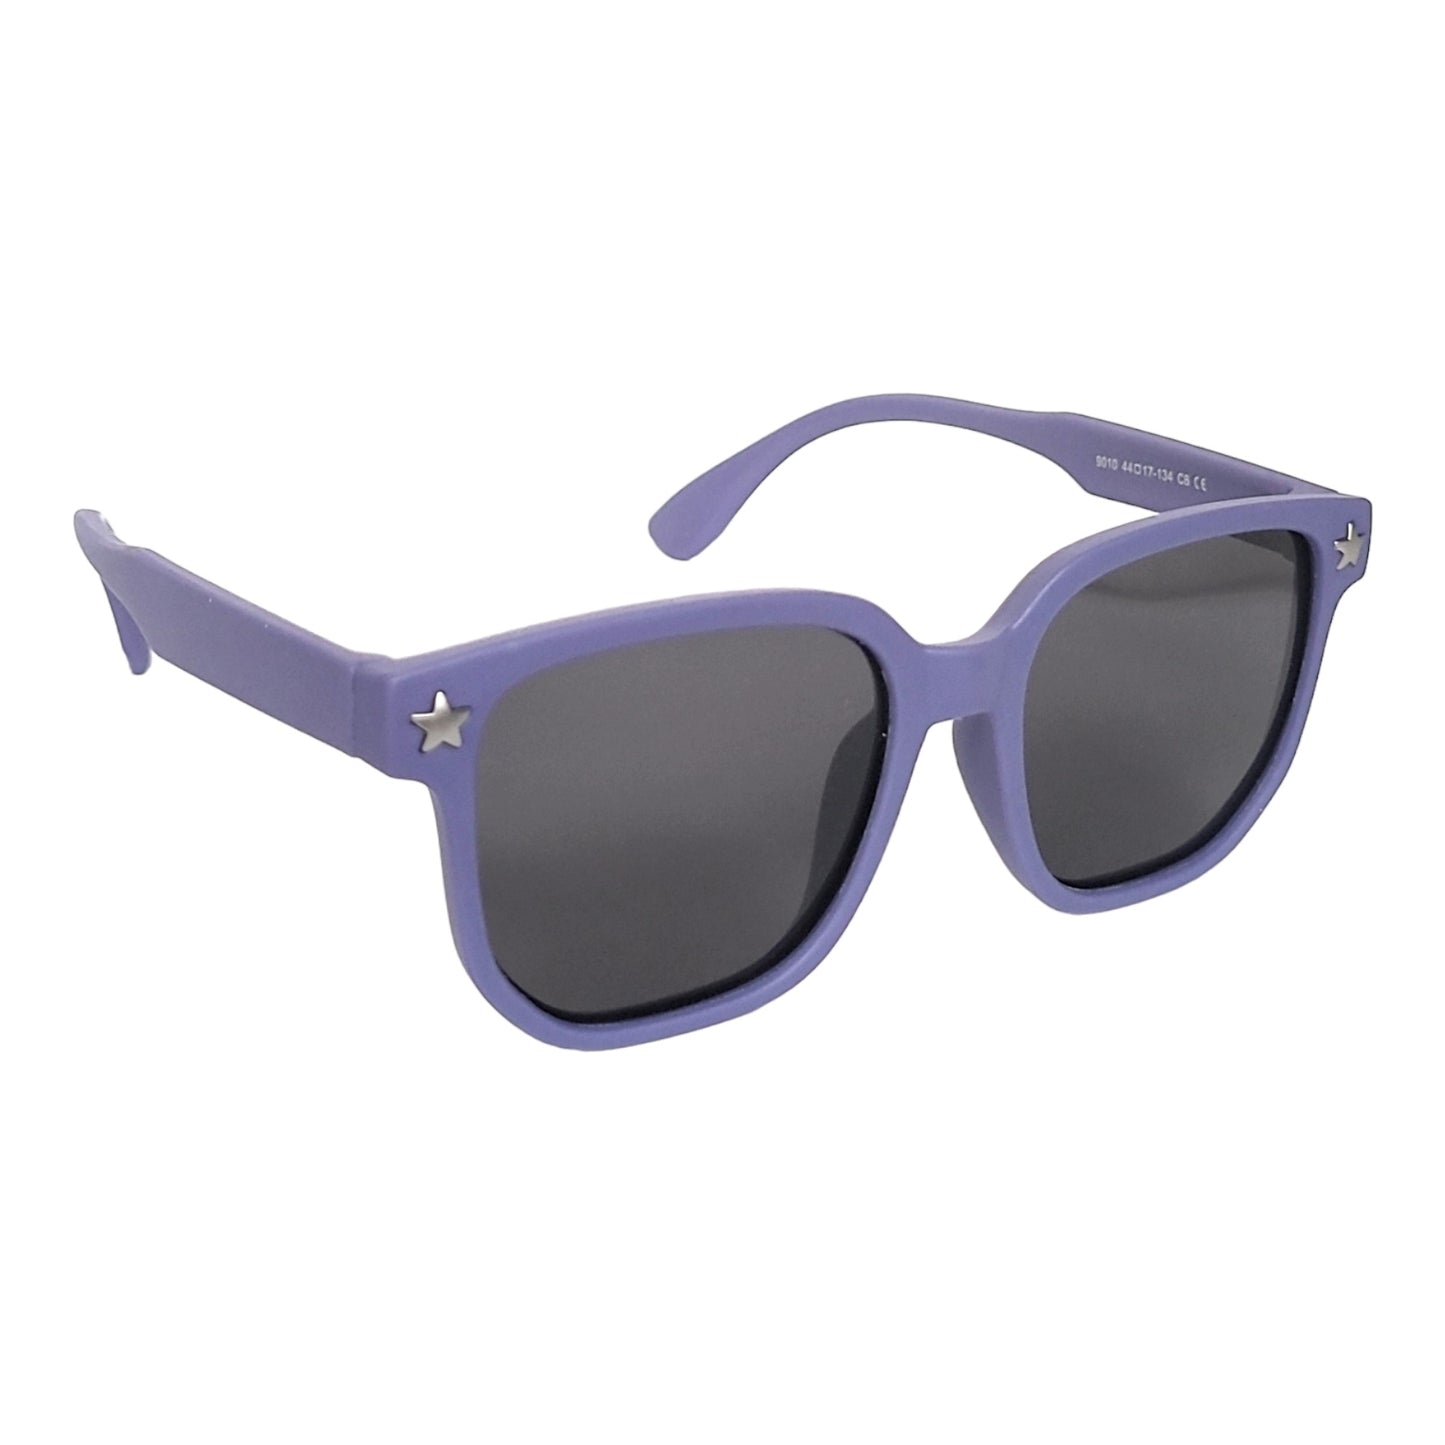 Wayfarer Kids Polarized Sunglasses for Children Age 4-9 Years Old, Girl or Boy  | affaires-9010 - Purple